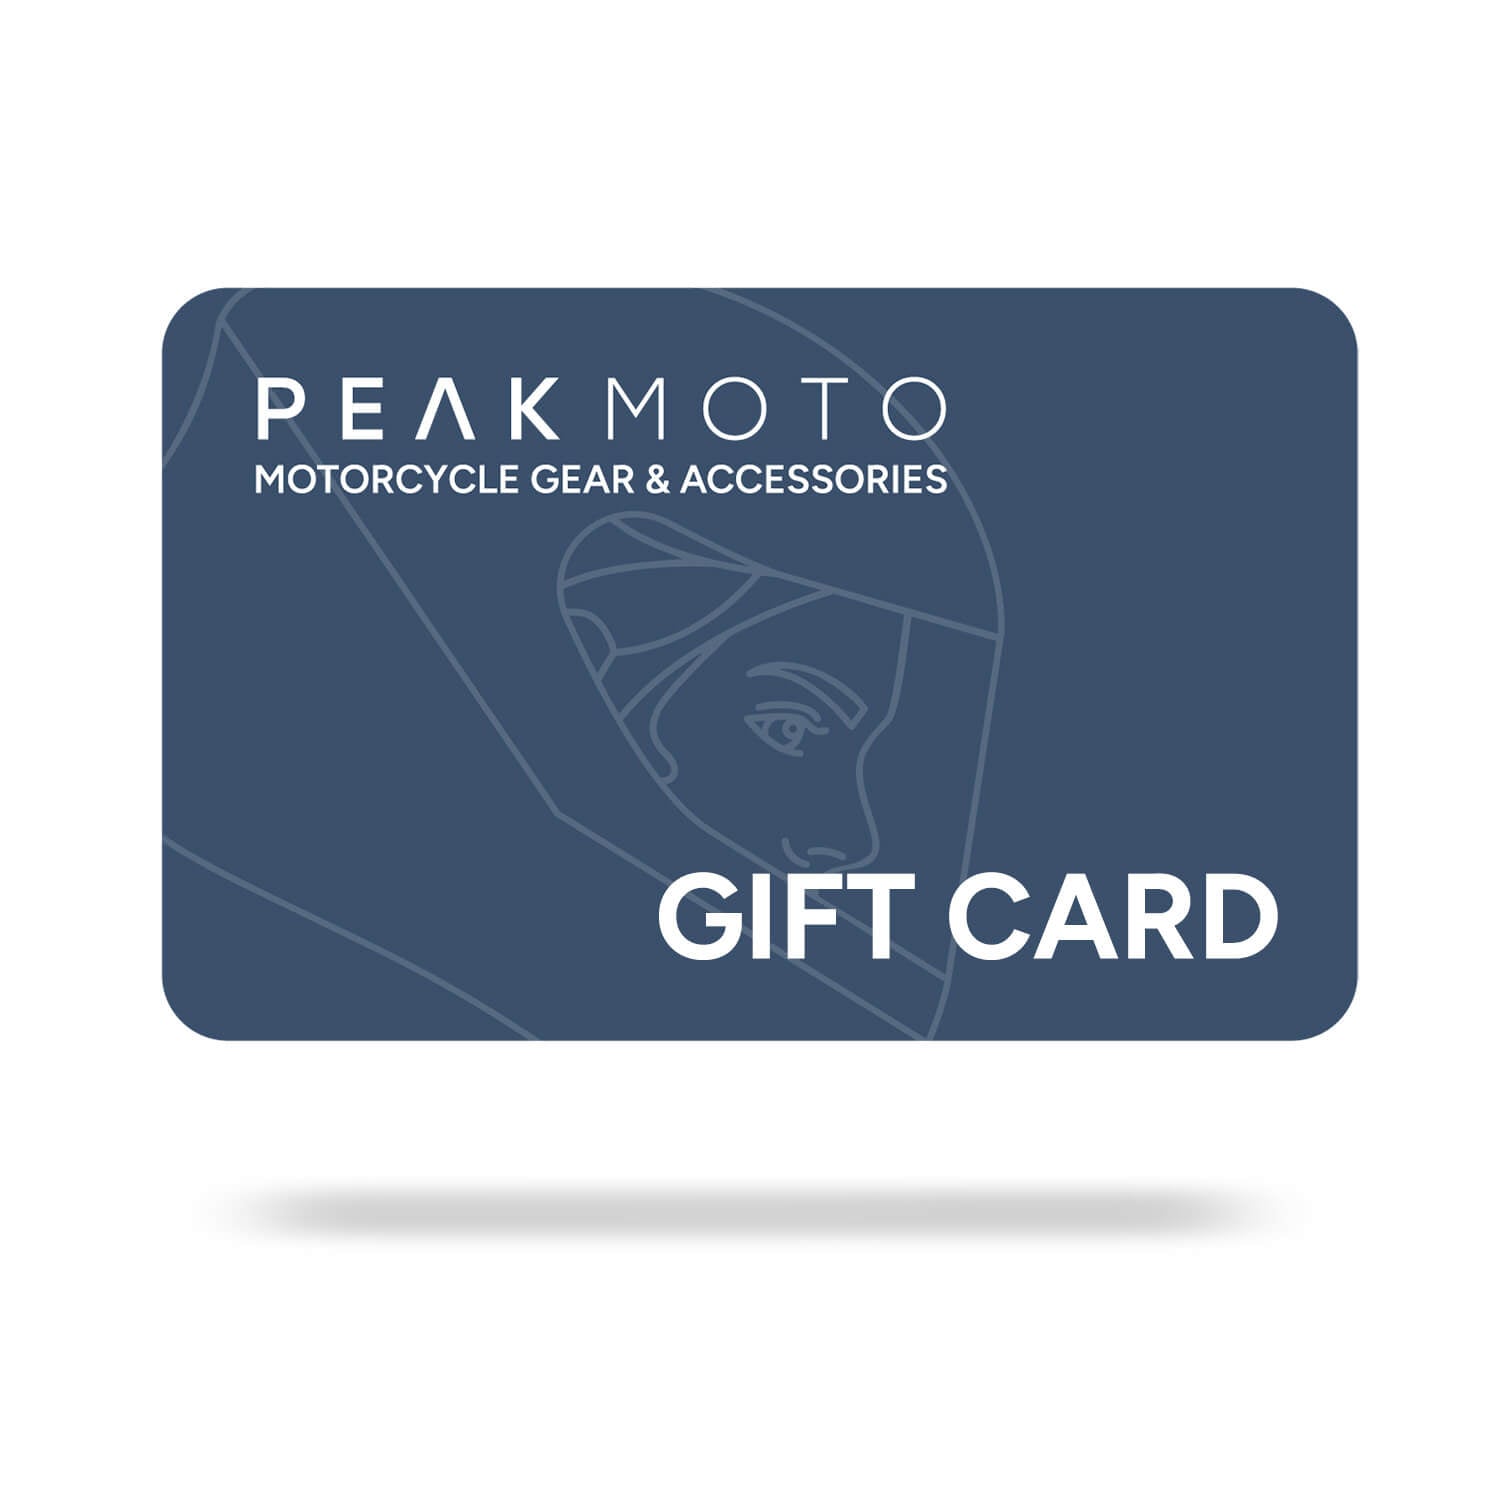 Peak Moto Gift Card